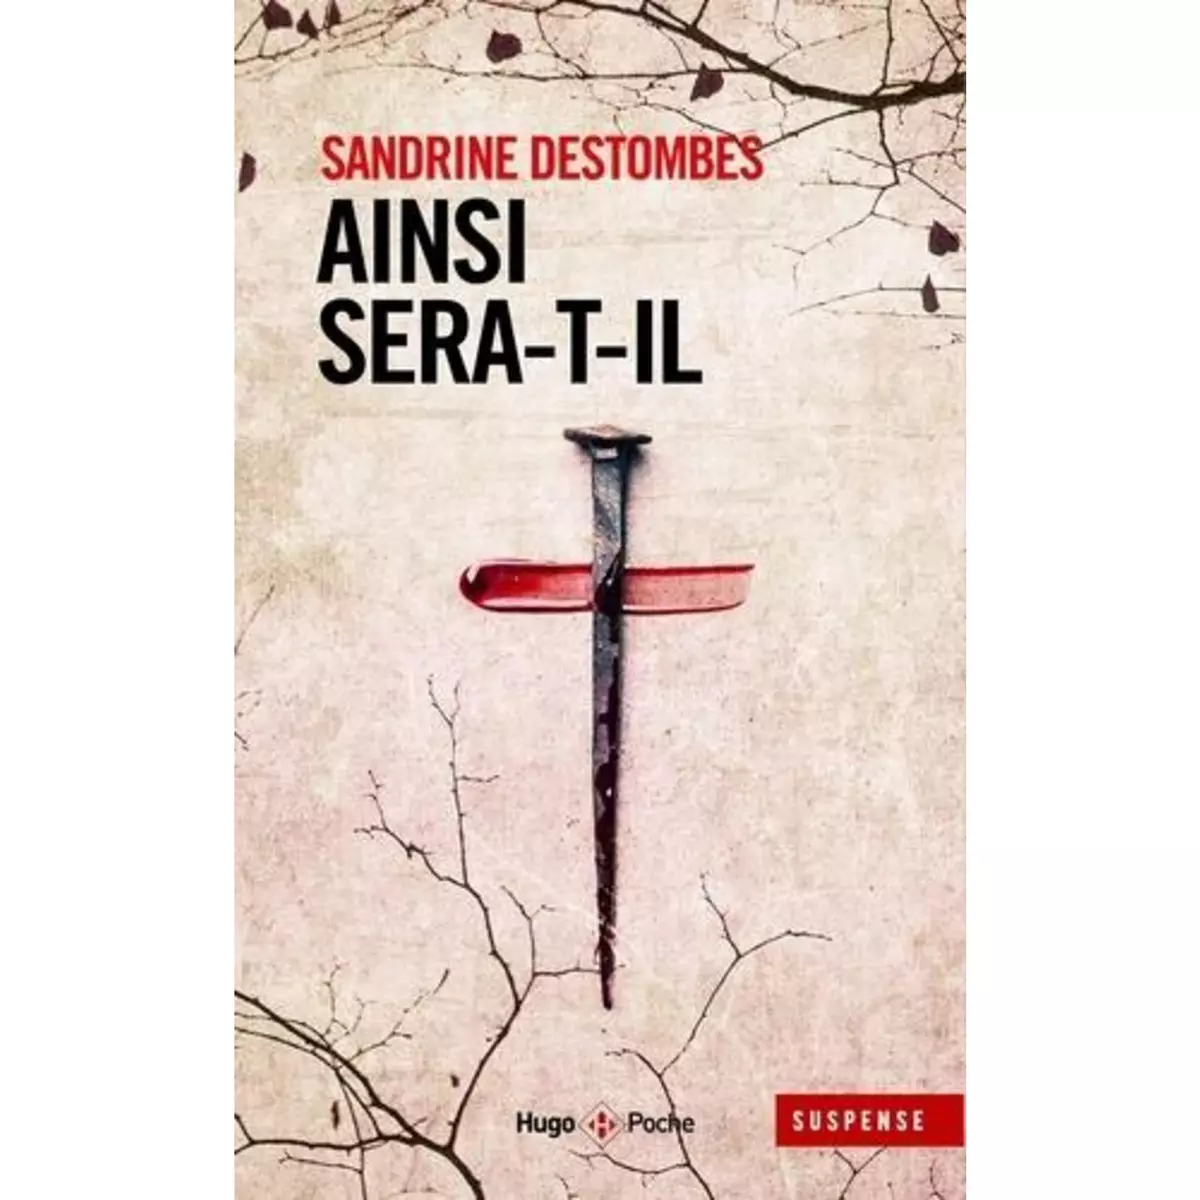  AINSI SERA-T-IL, Destombes Sandrine